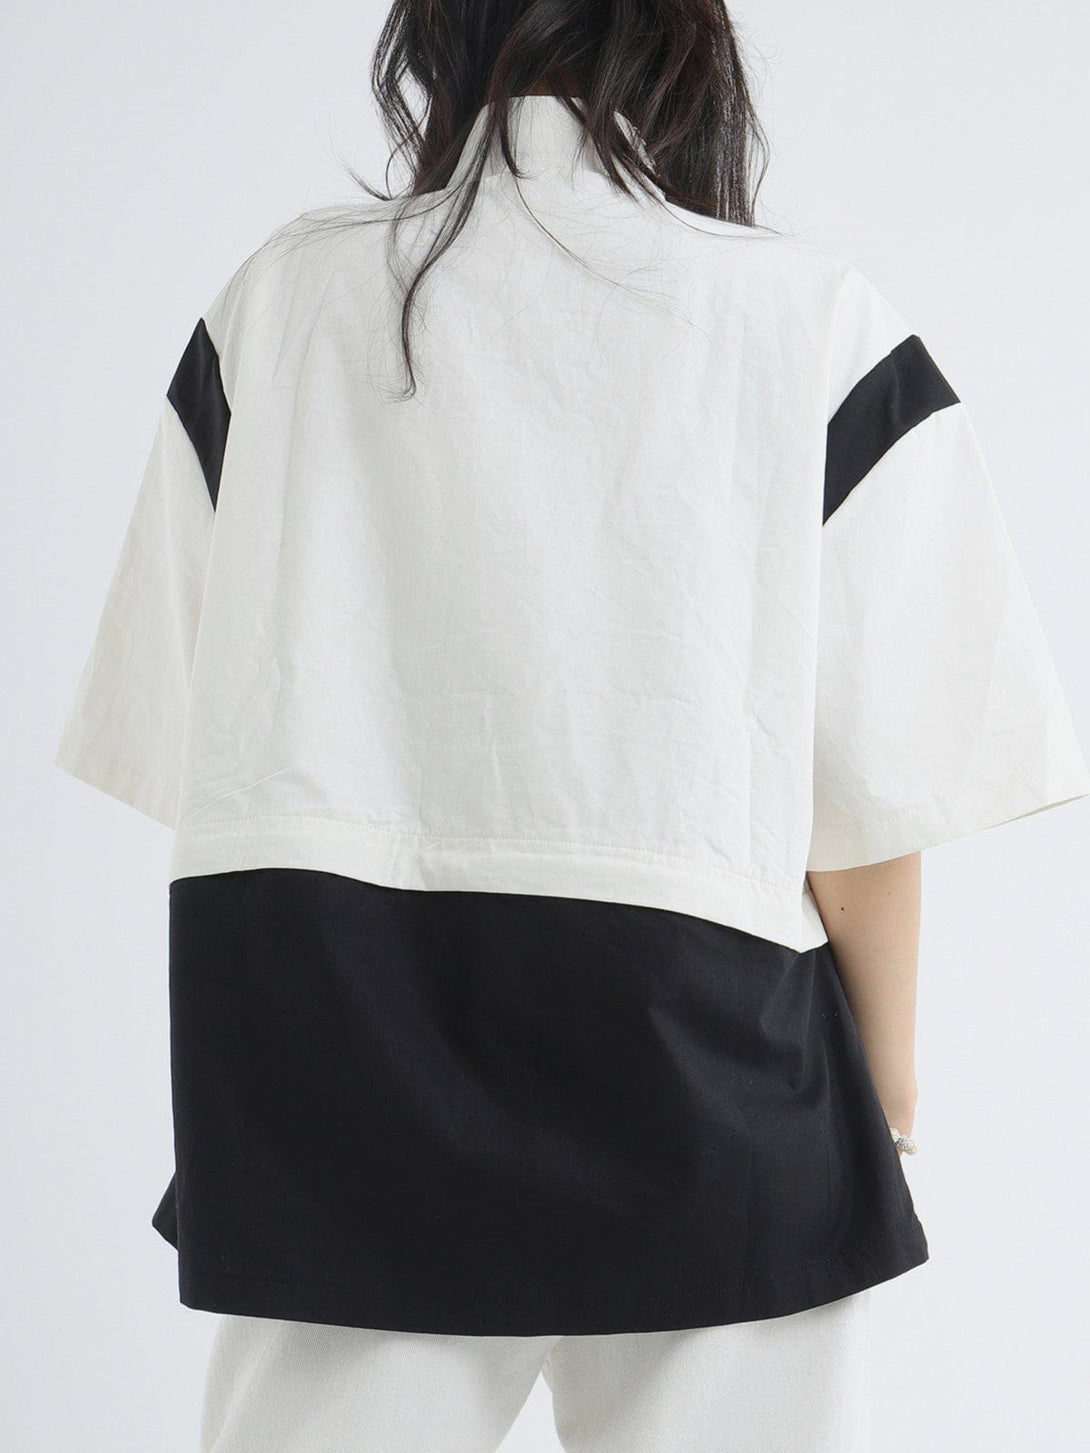 Majesda® - Detachable Short Sleeve Shirt outfit ideas streetwear fashion